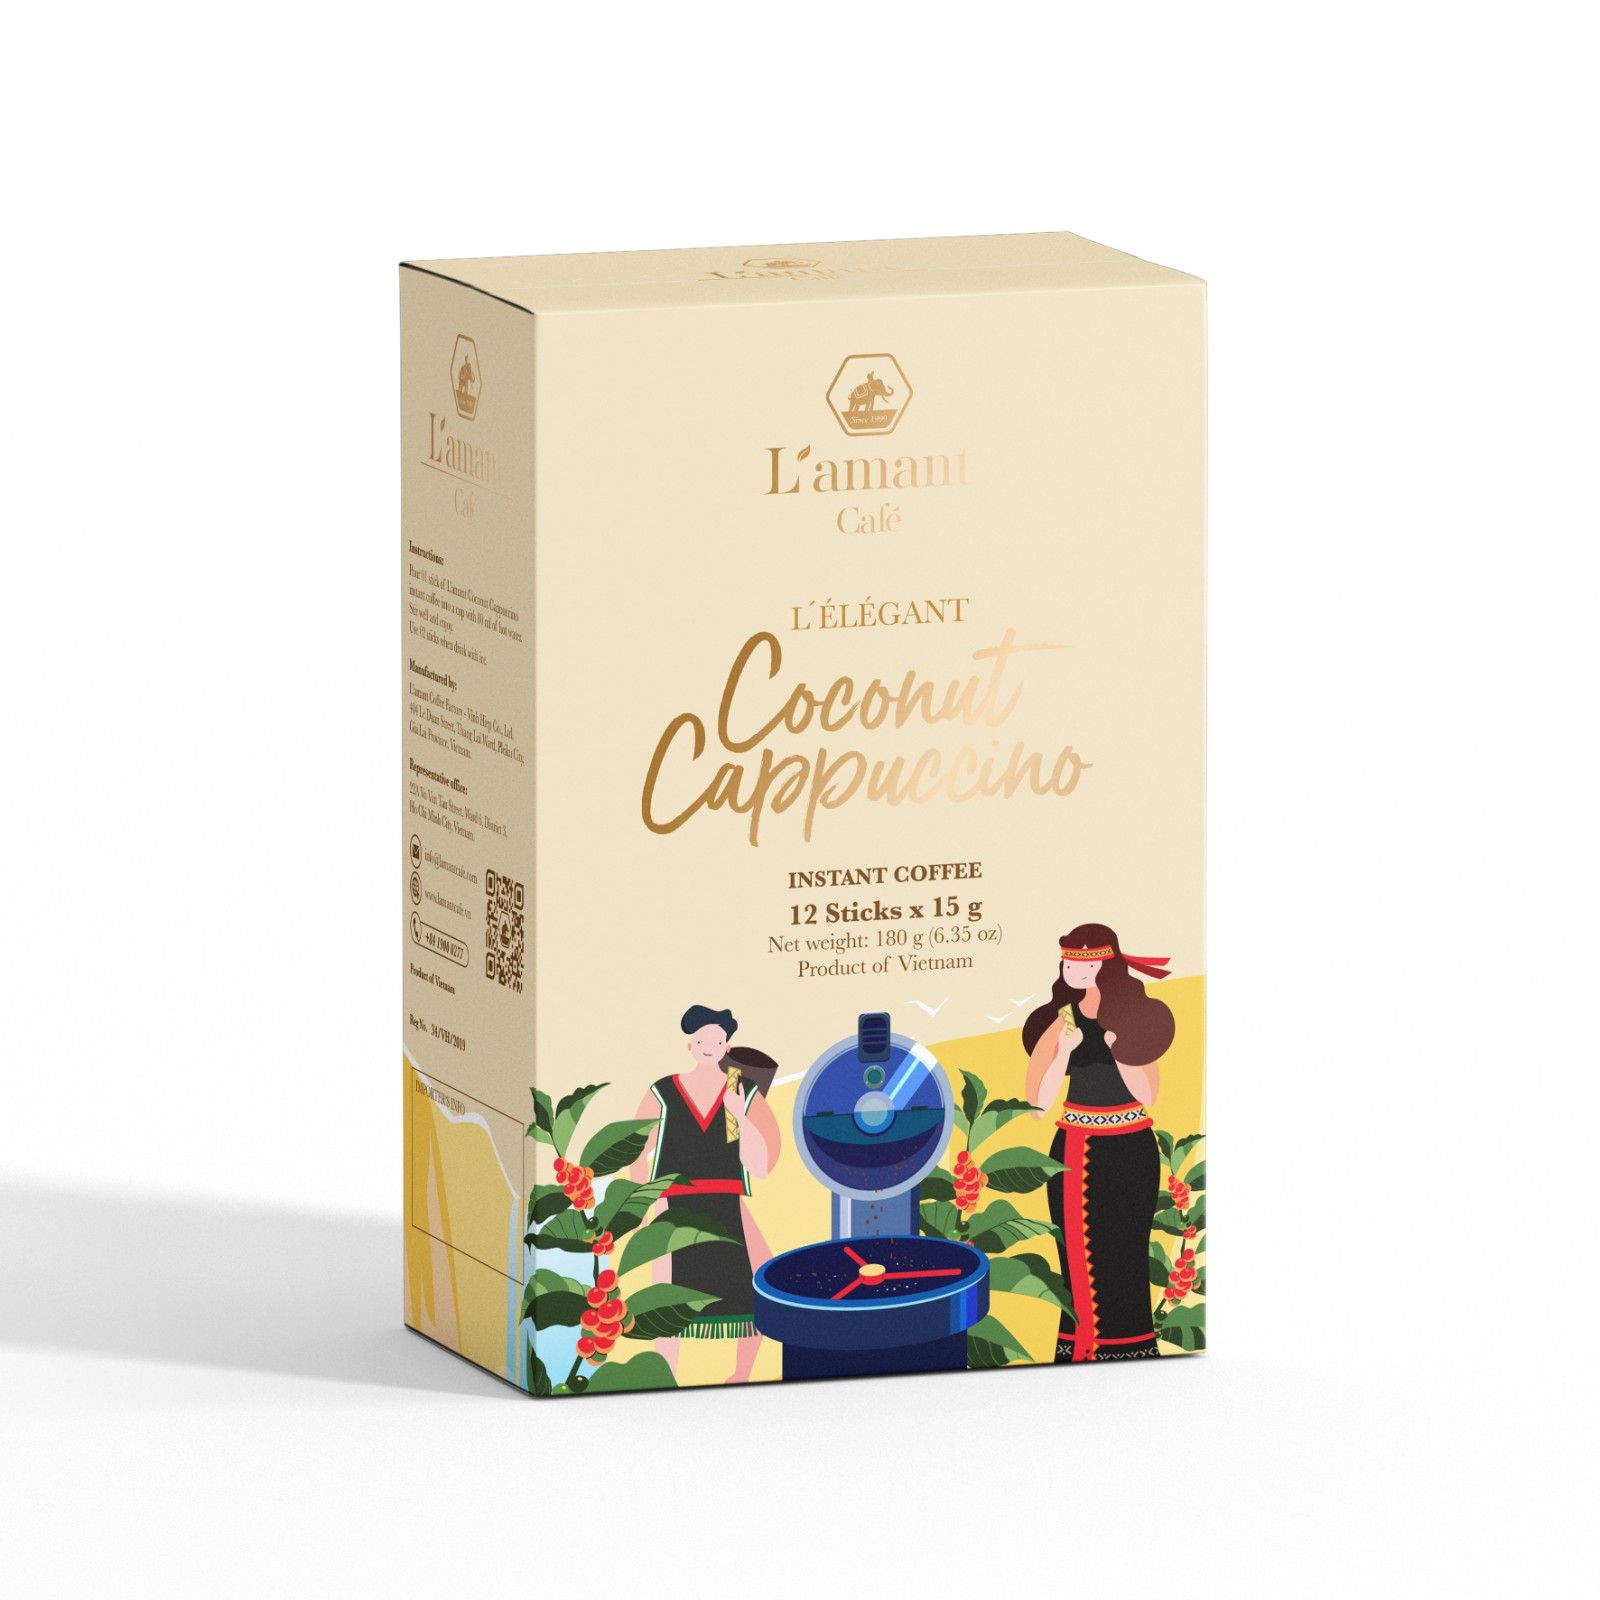  Cà phê hòa tan vị dừa L'amant Coconut Cappuccino (Hộp 12 gói x 15 gr) 